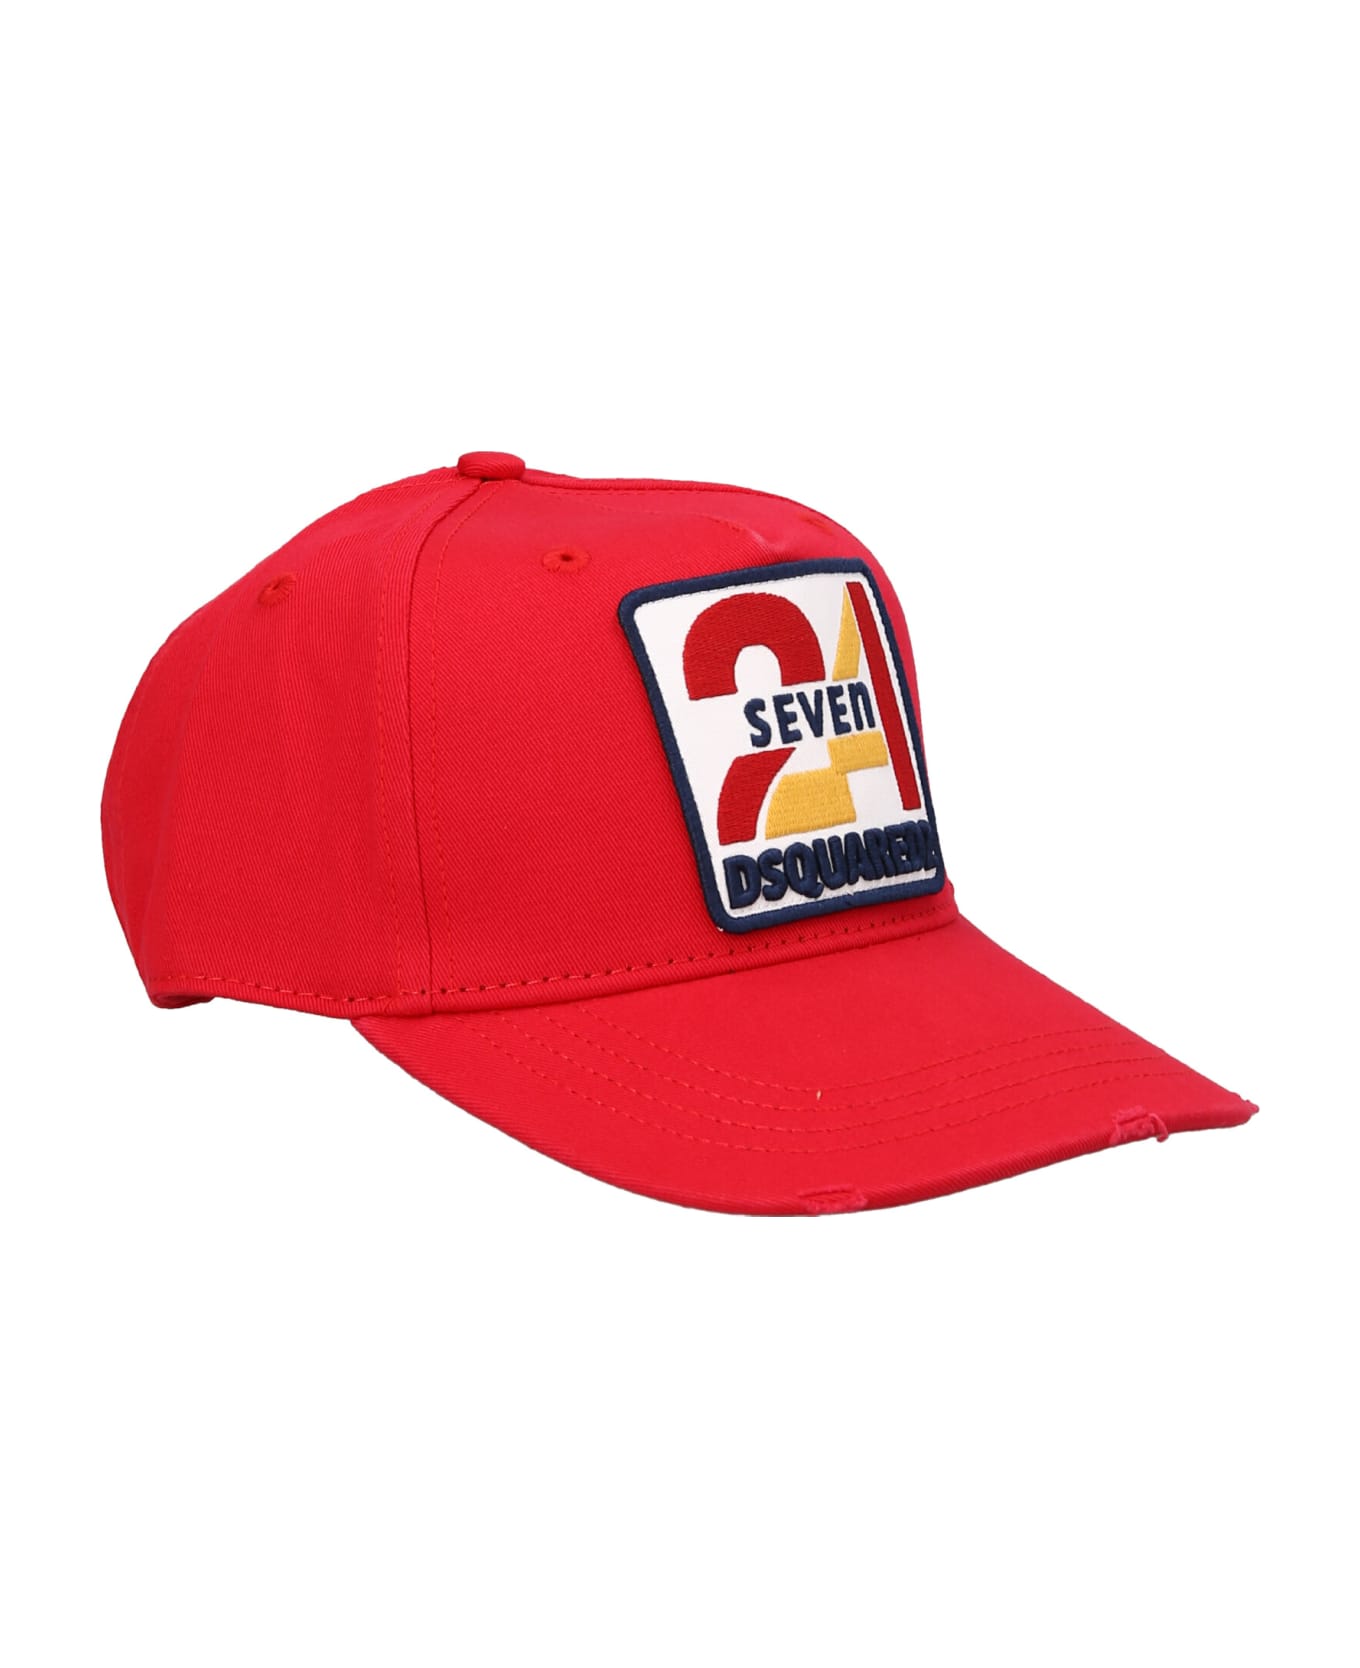 Dsquared2 Logo Cap - Red 帽子